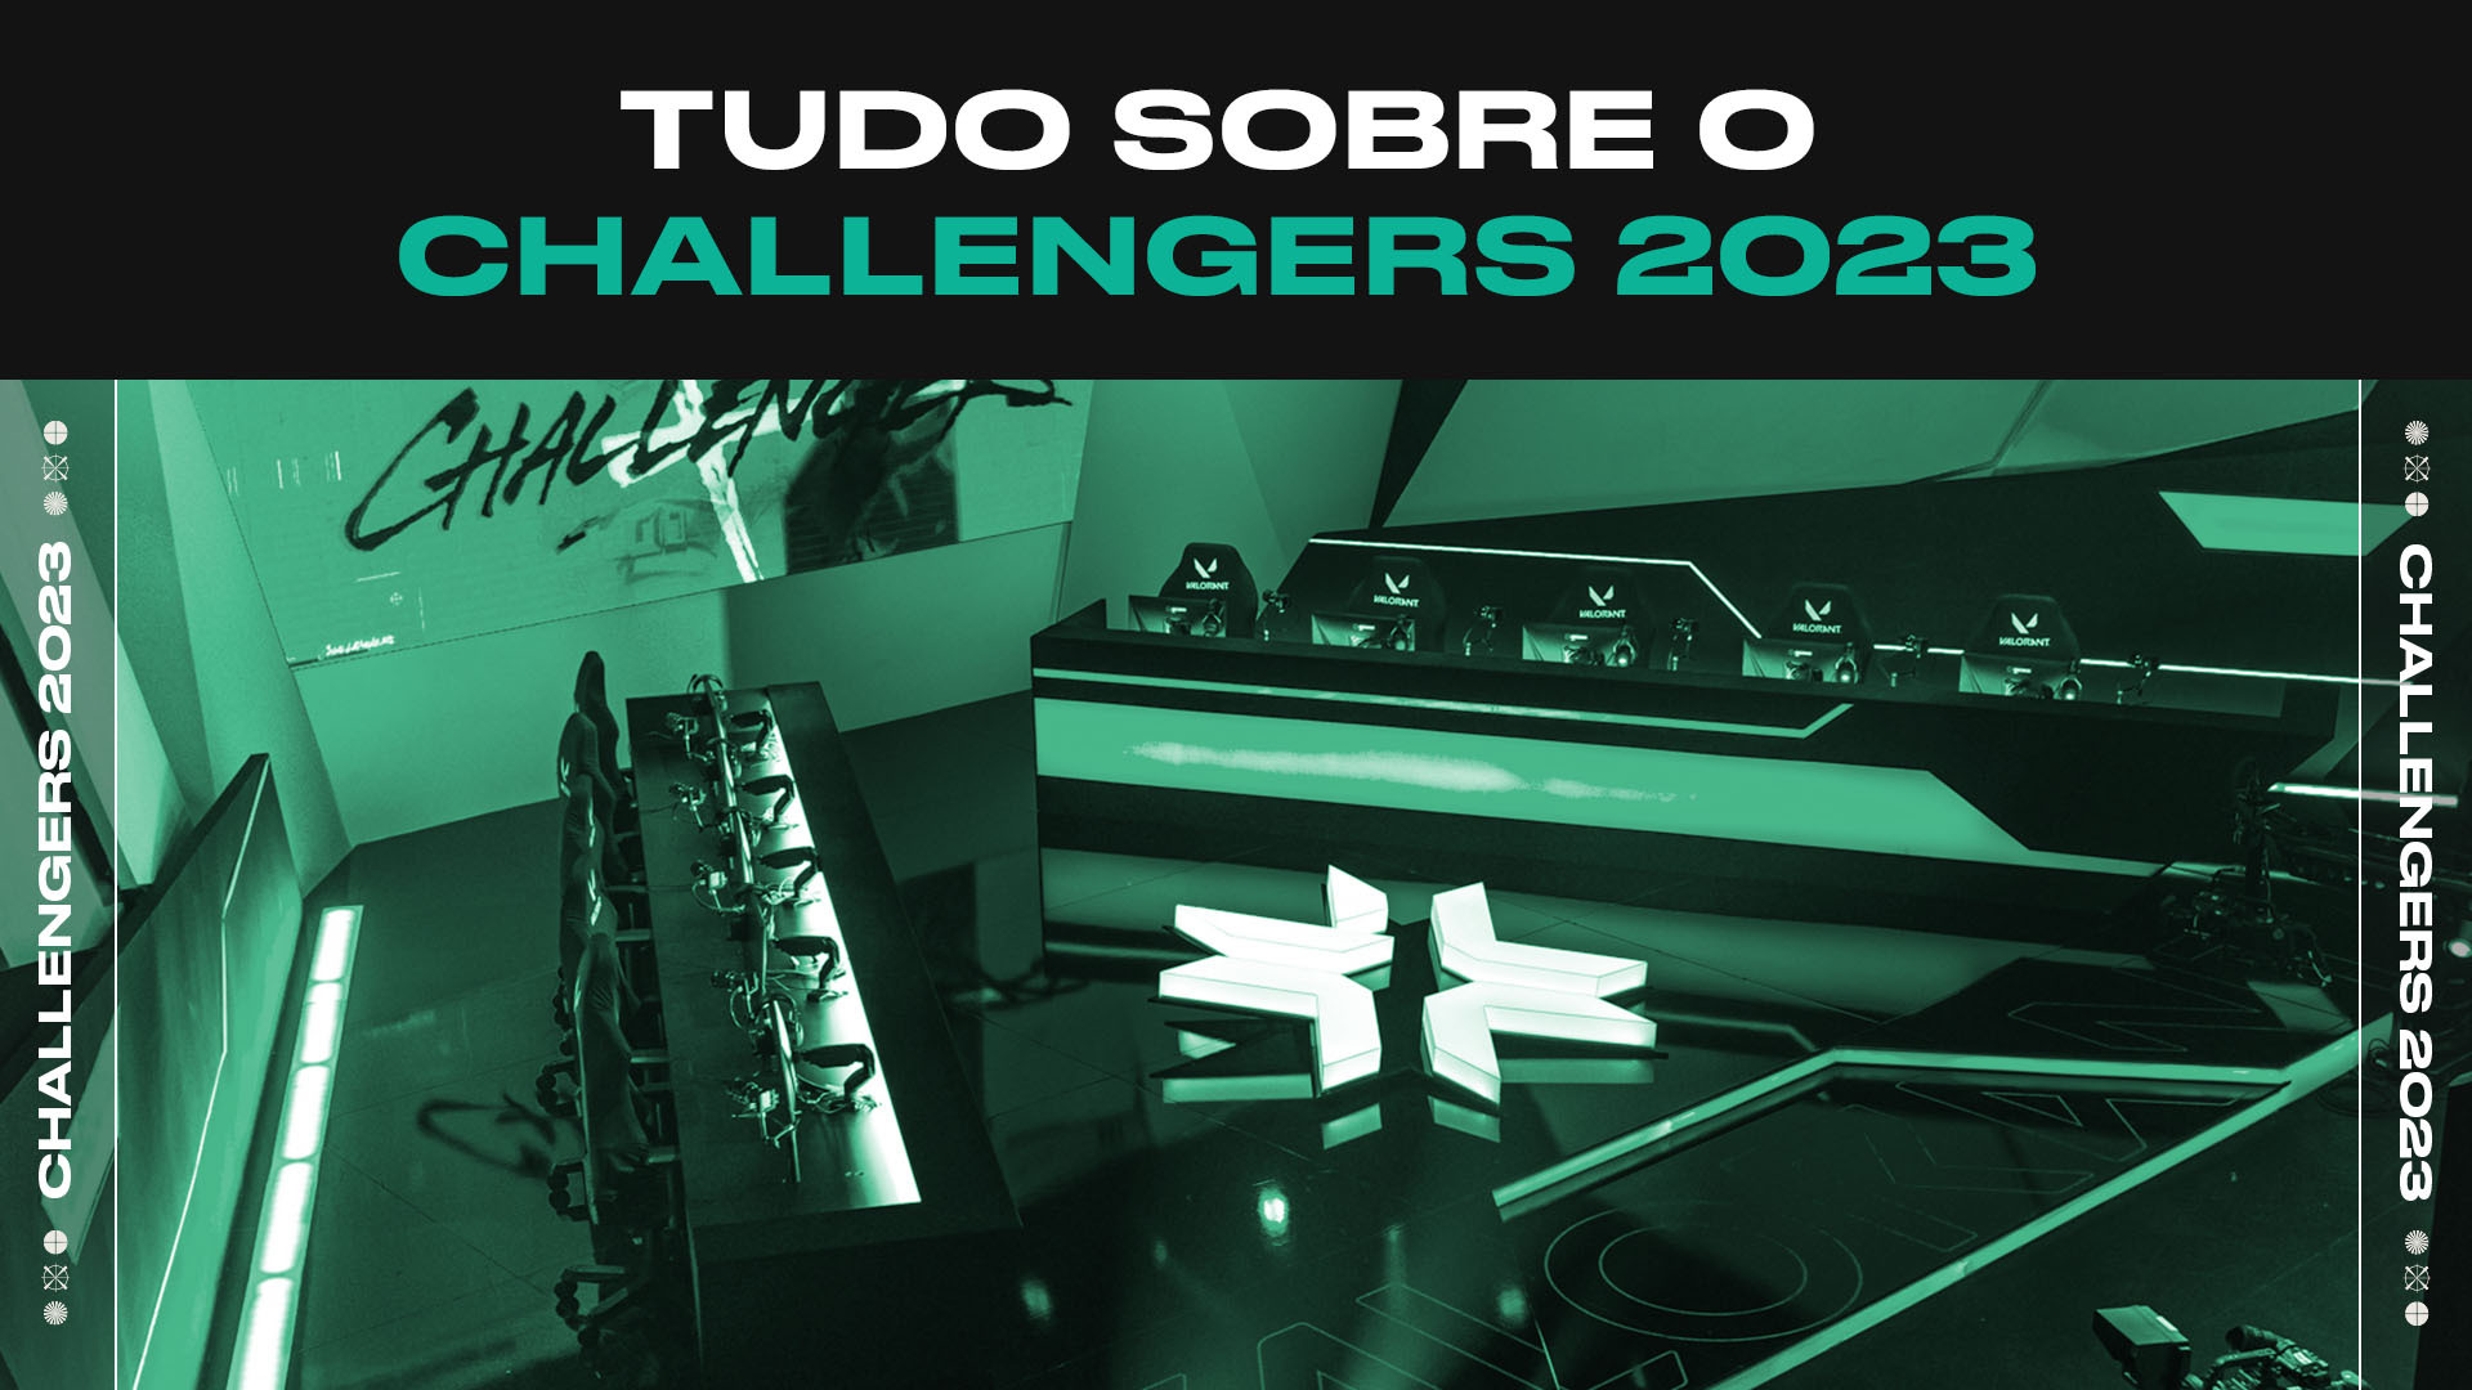 VCT Brazil 2023: 00 Nation assume time da Gamelanders; veja elenco, valorant